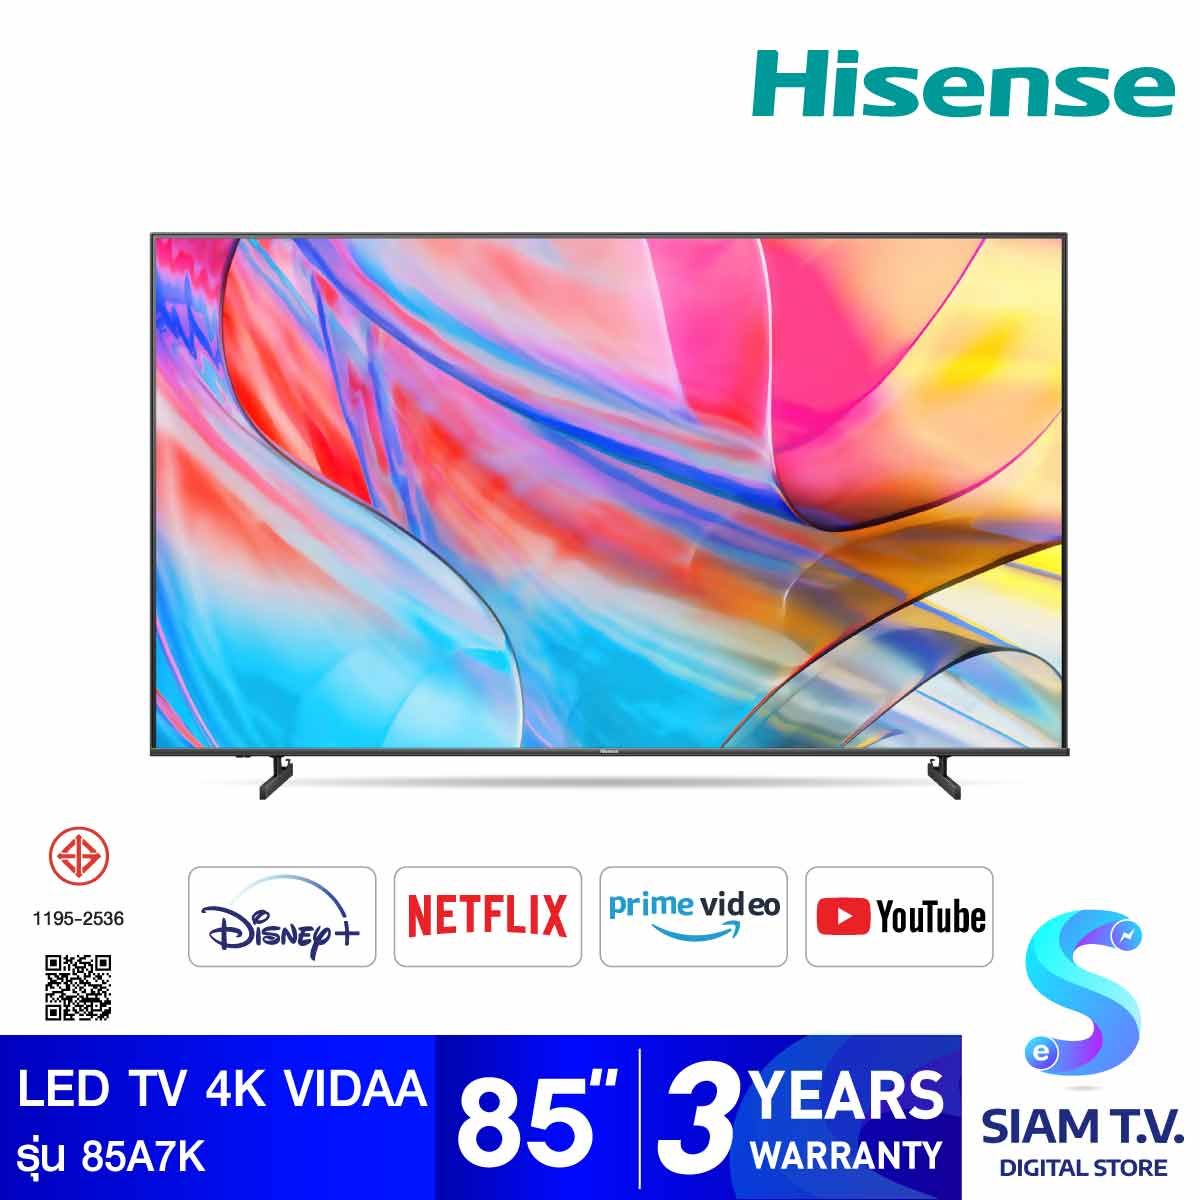 Hisense LED TV 4K VIDAA  รุ่น 85A7K สมาร์ททีวี 4K ขนาด 85 นิ้ว